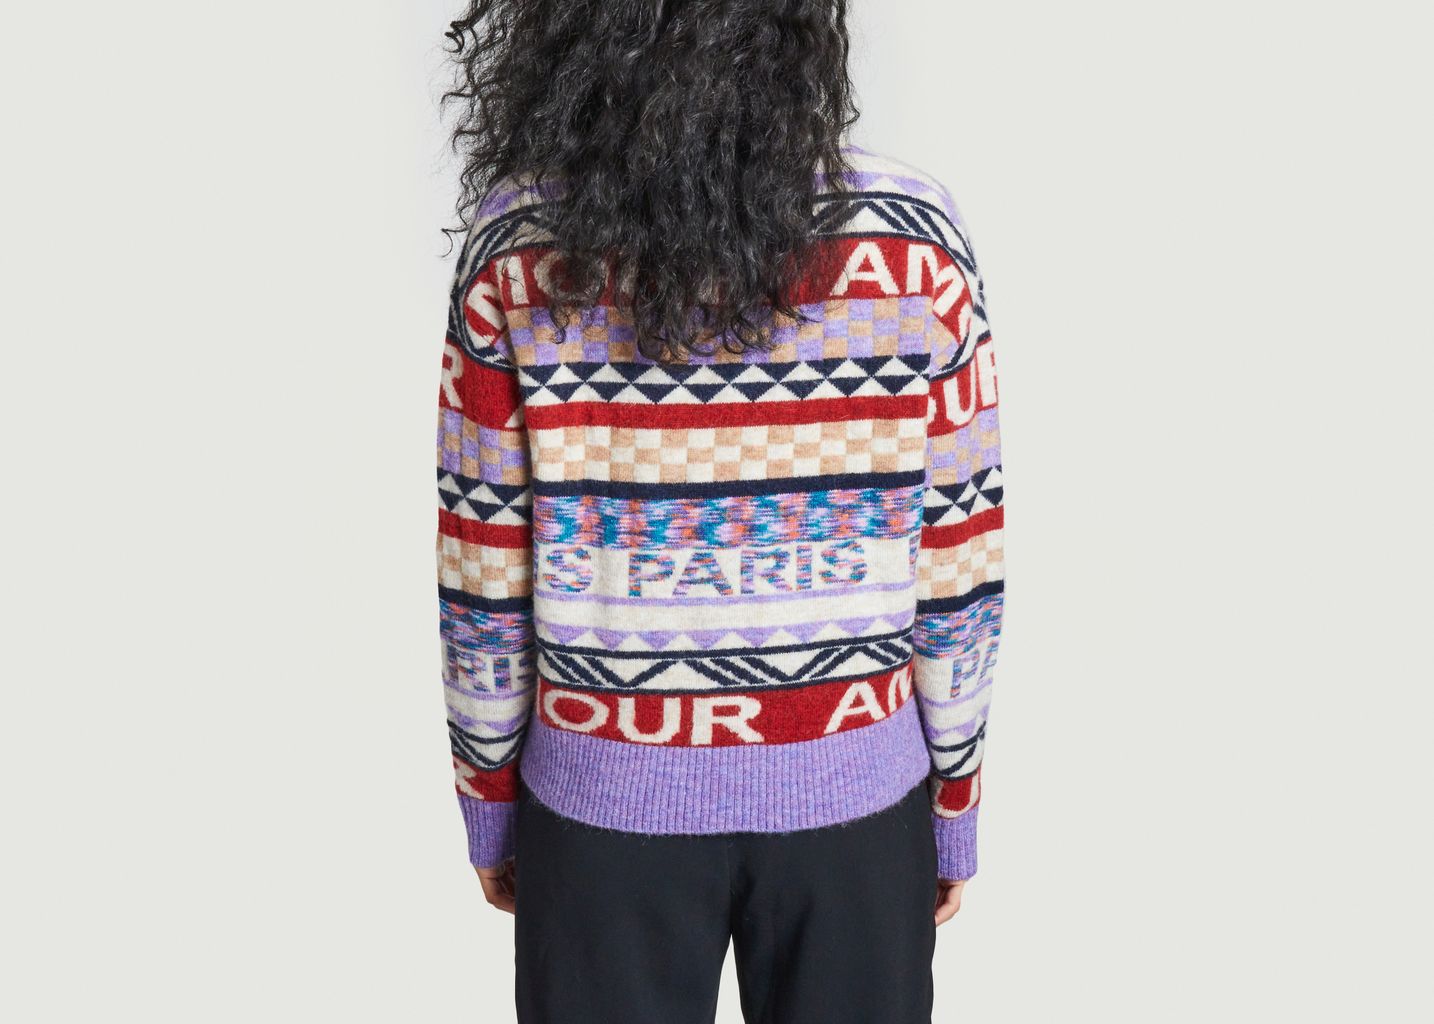 Peerico sweater - Suncoo